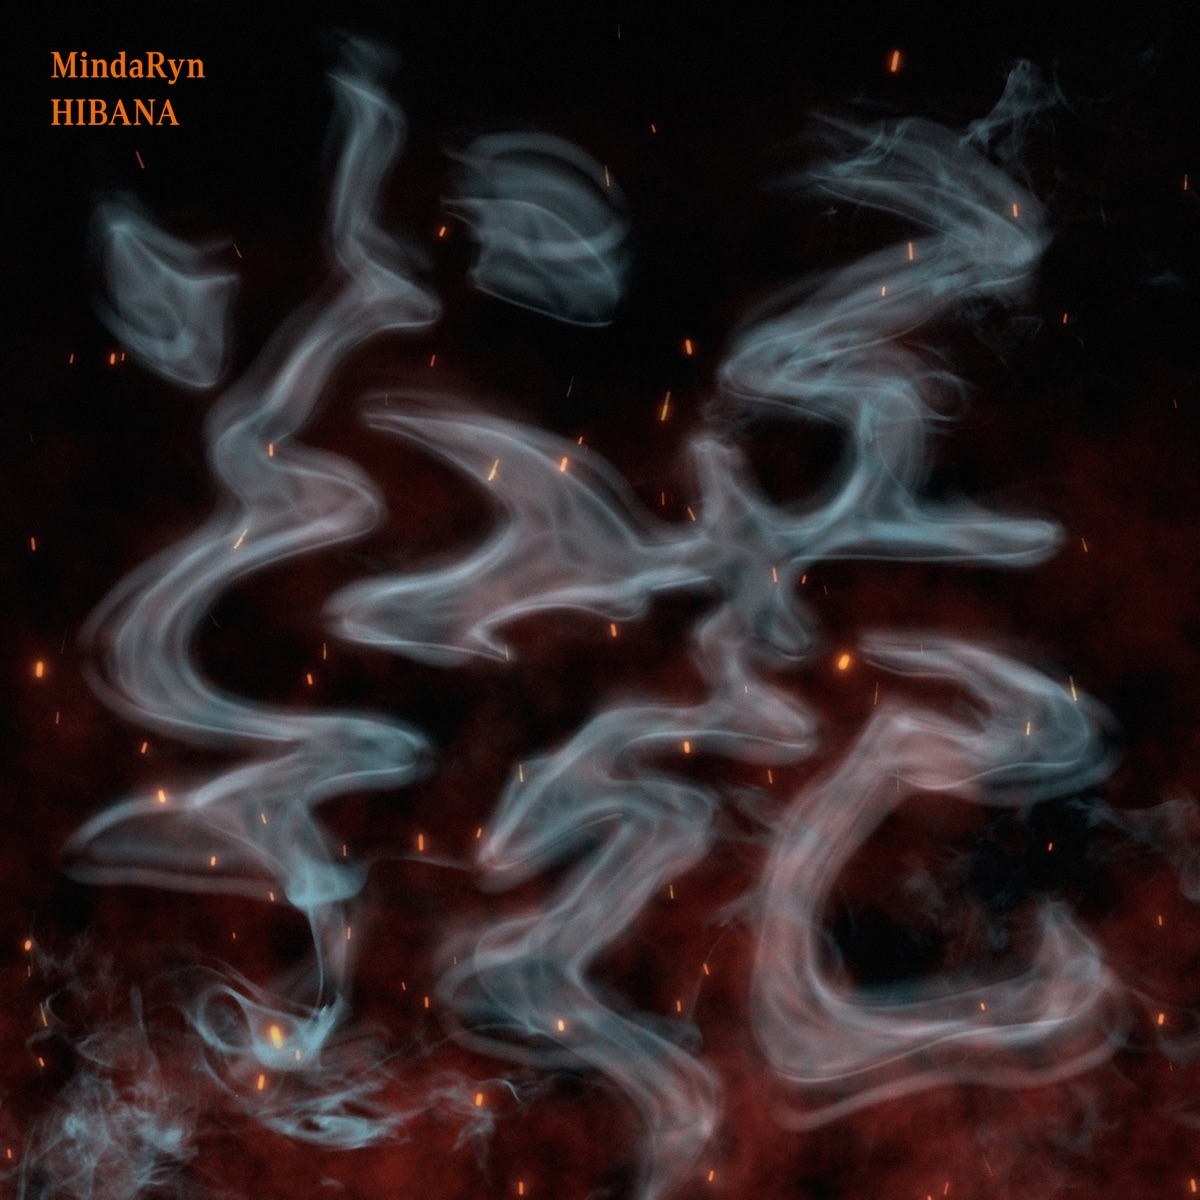 MindaRyn HIBANA cover artwork